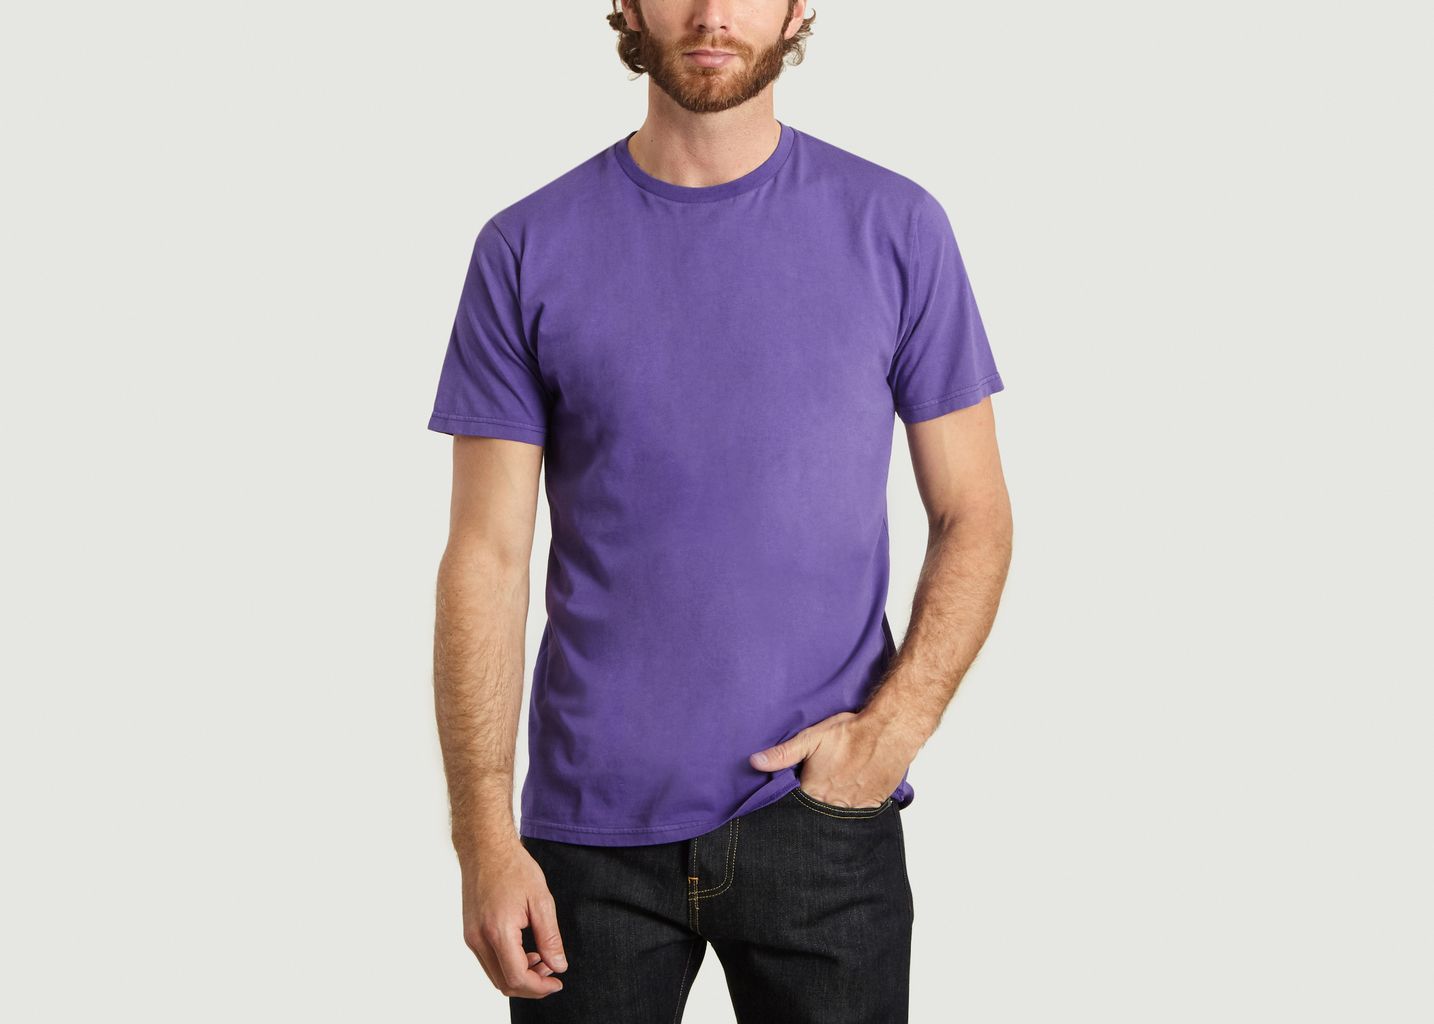 Colorful Standard Purple Classic T Shirt